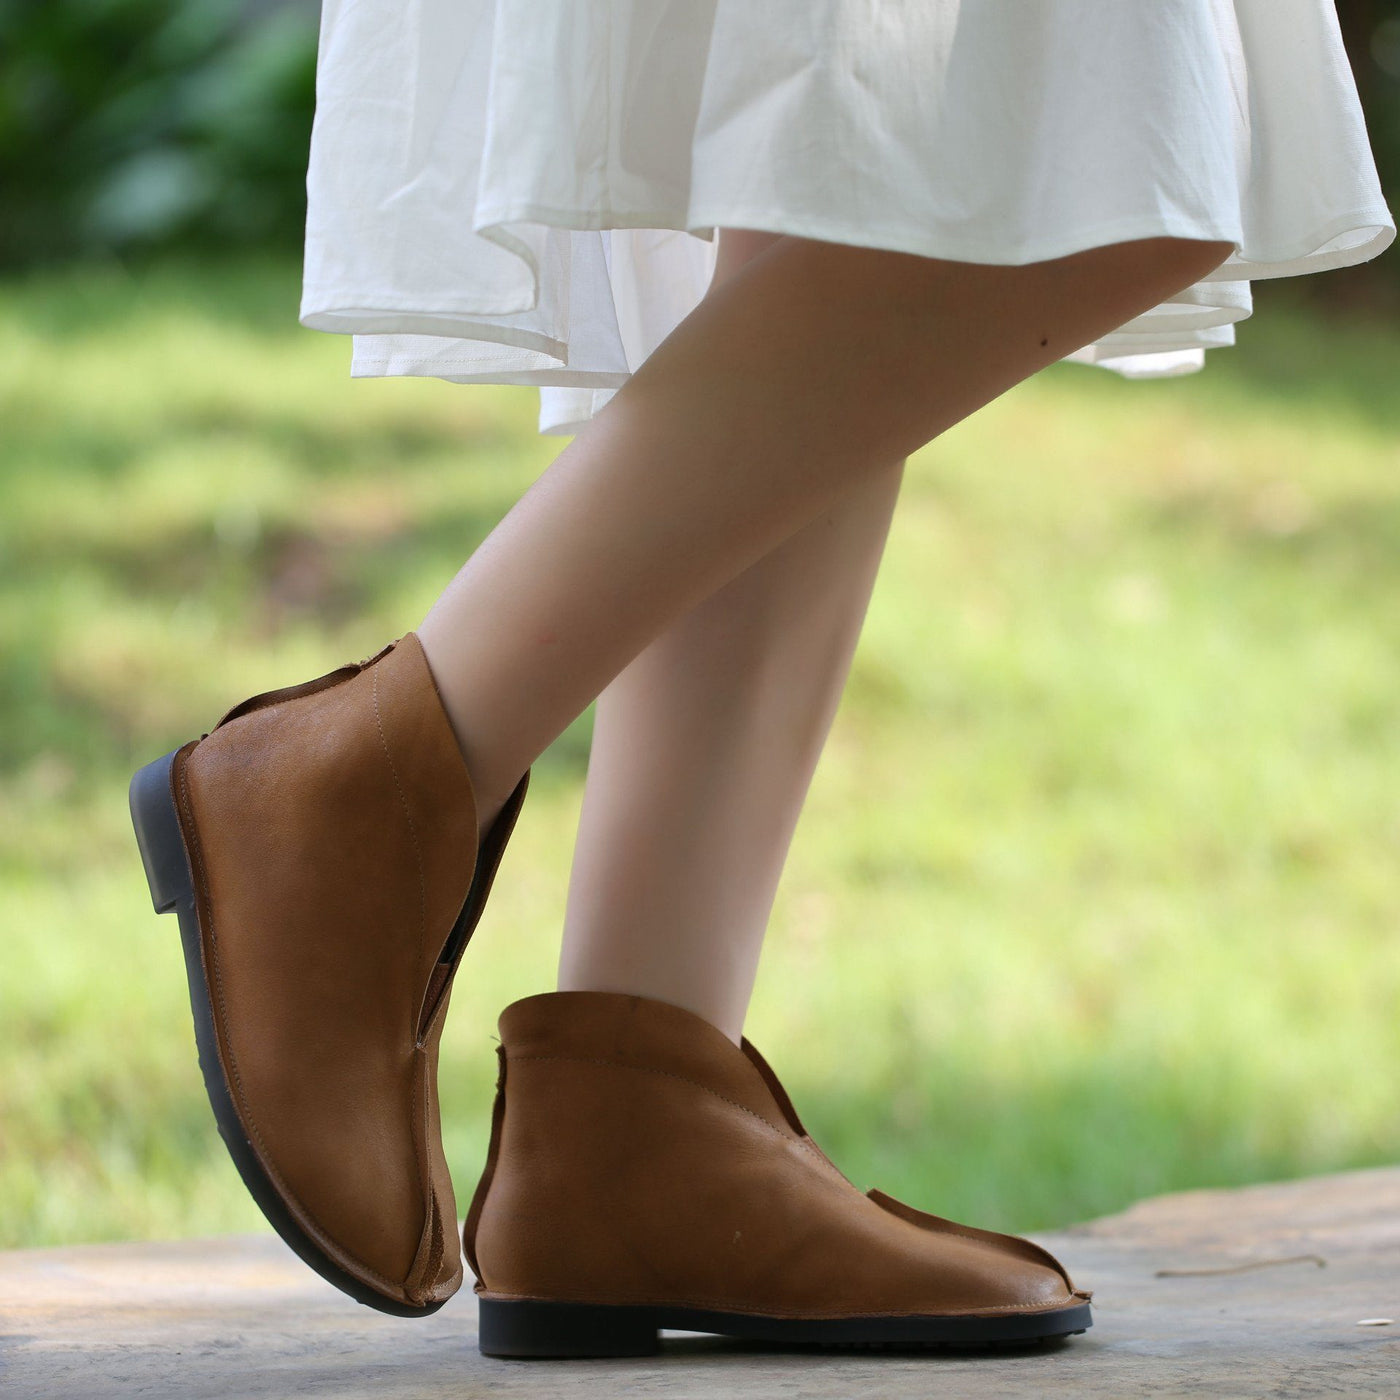 Retro Leather Women's Comfortable Shoes